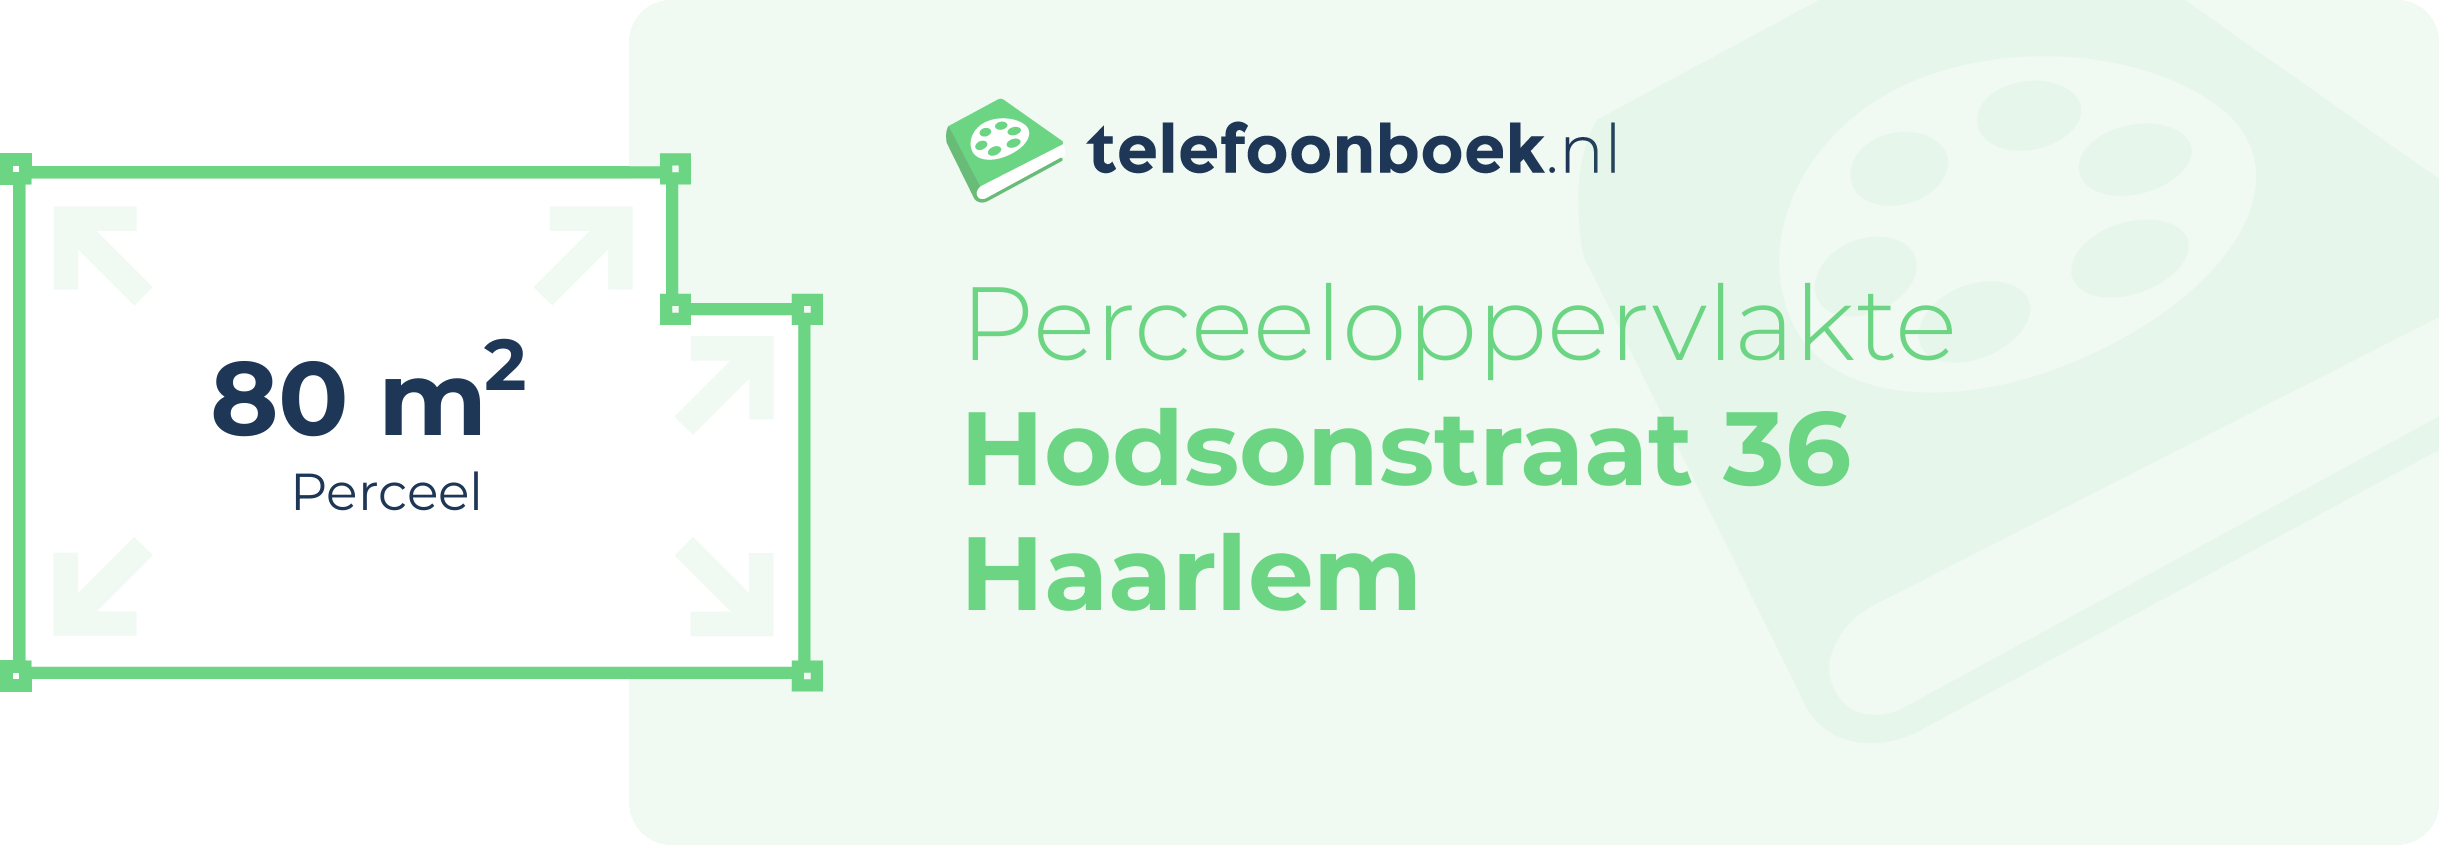 Perceeloppervlakte Hodsonstraat 36 Haarlem